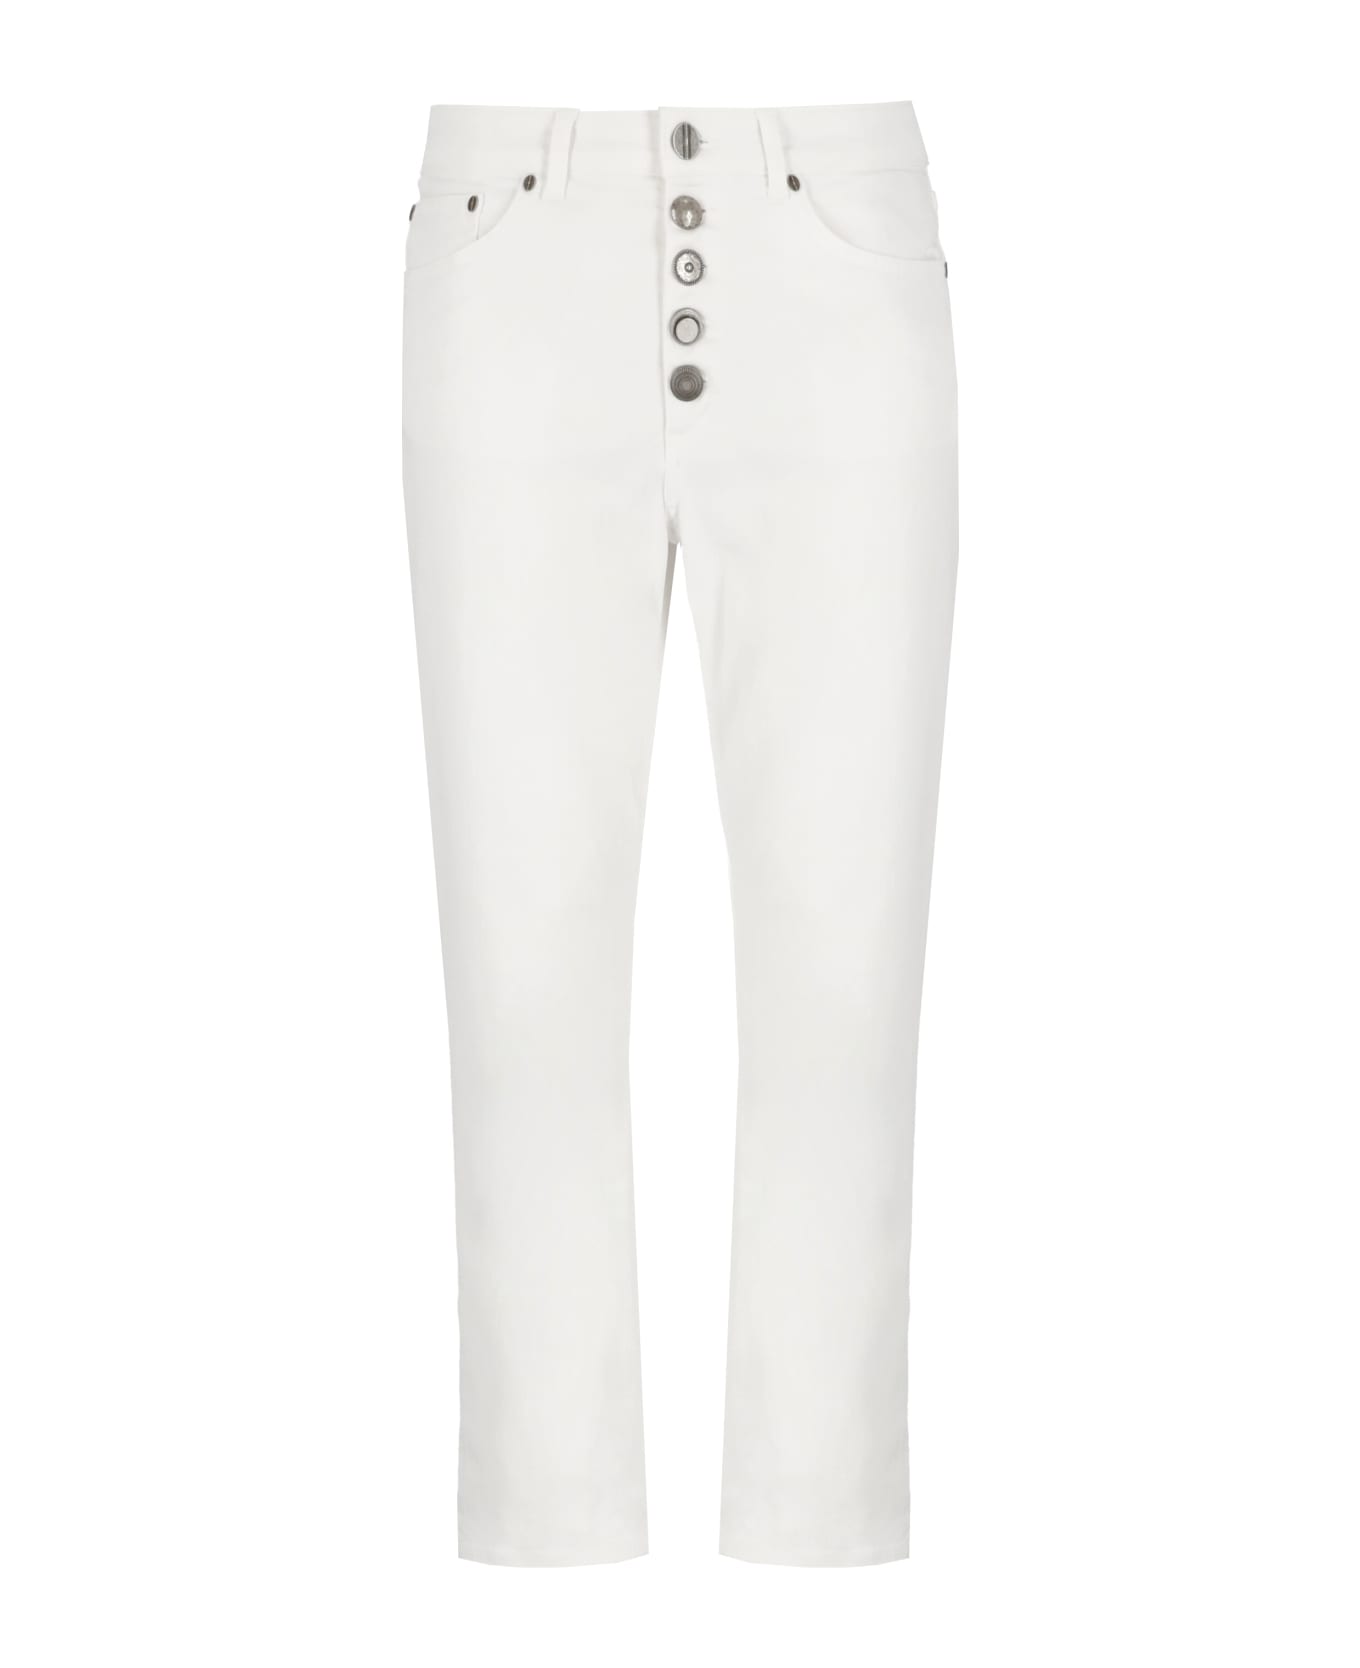 Dondup Koons Gioiello Jeans - White